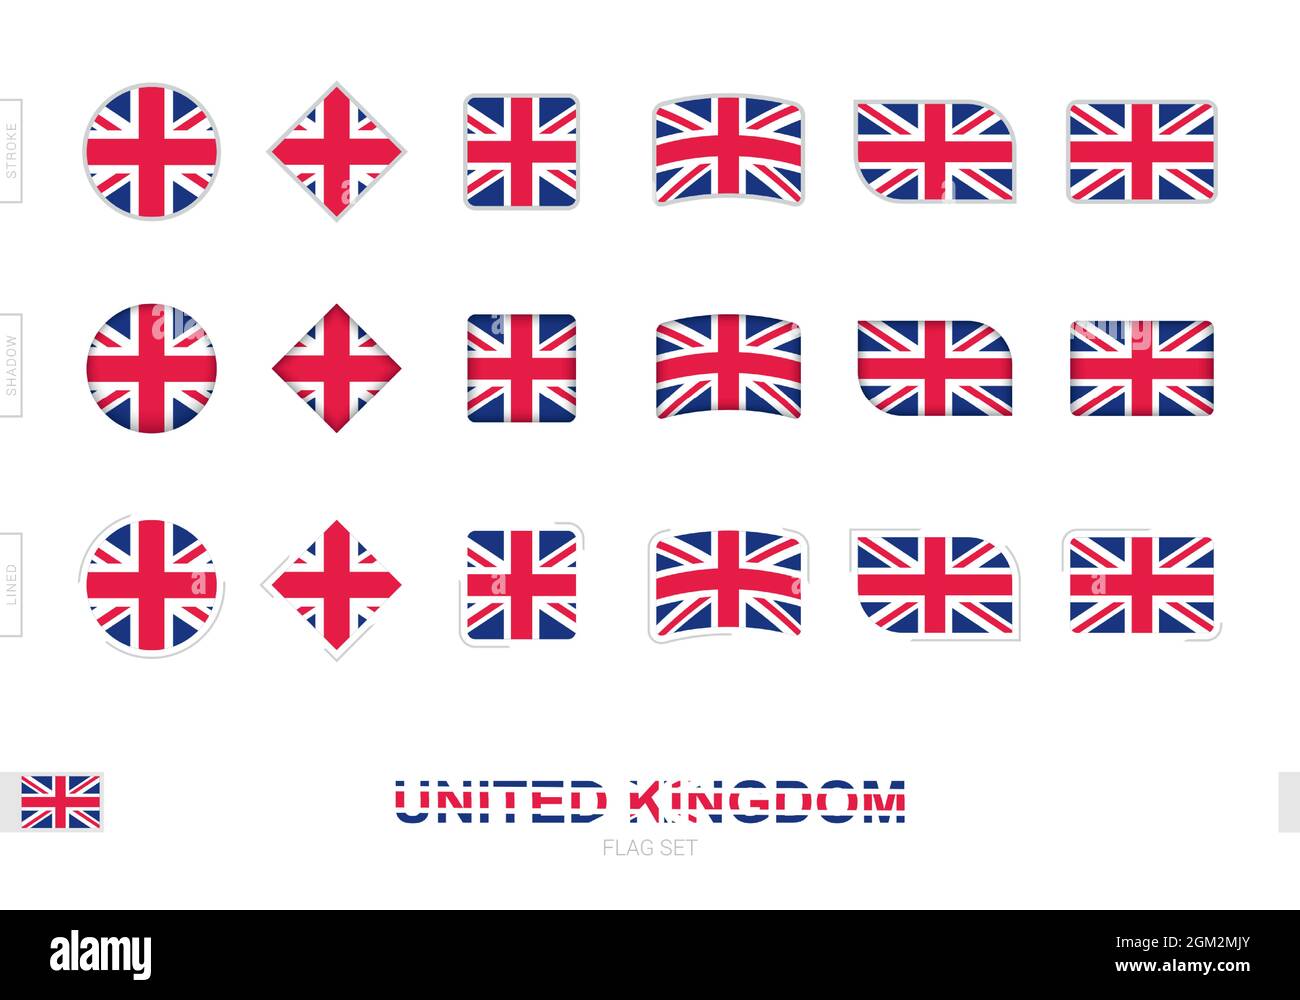 43+ United Kingdom Flags Background